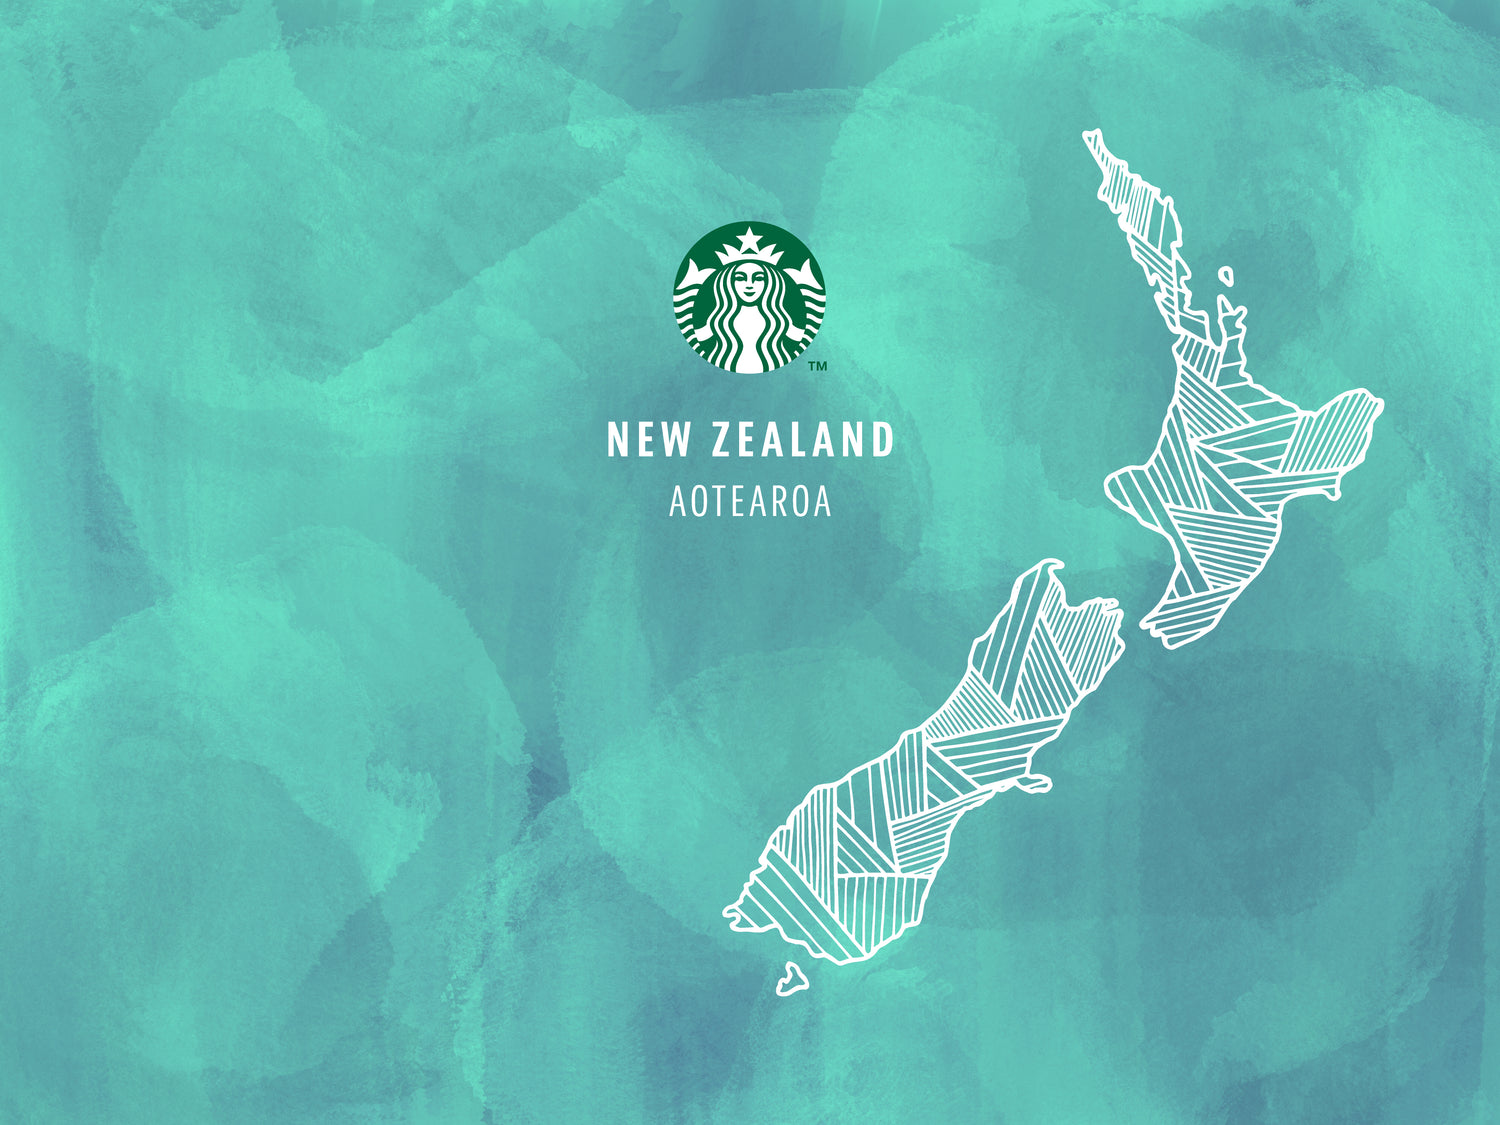 Accessories – Starbucks NZ